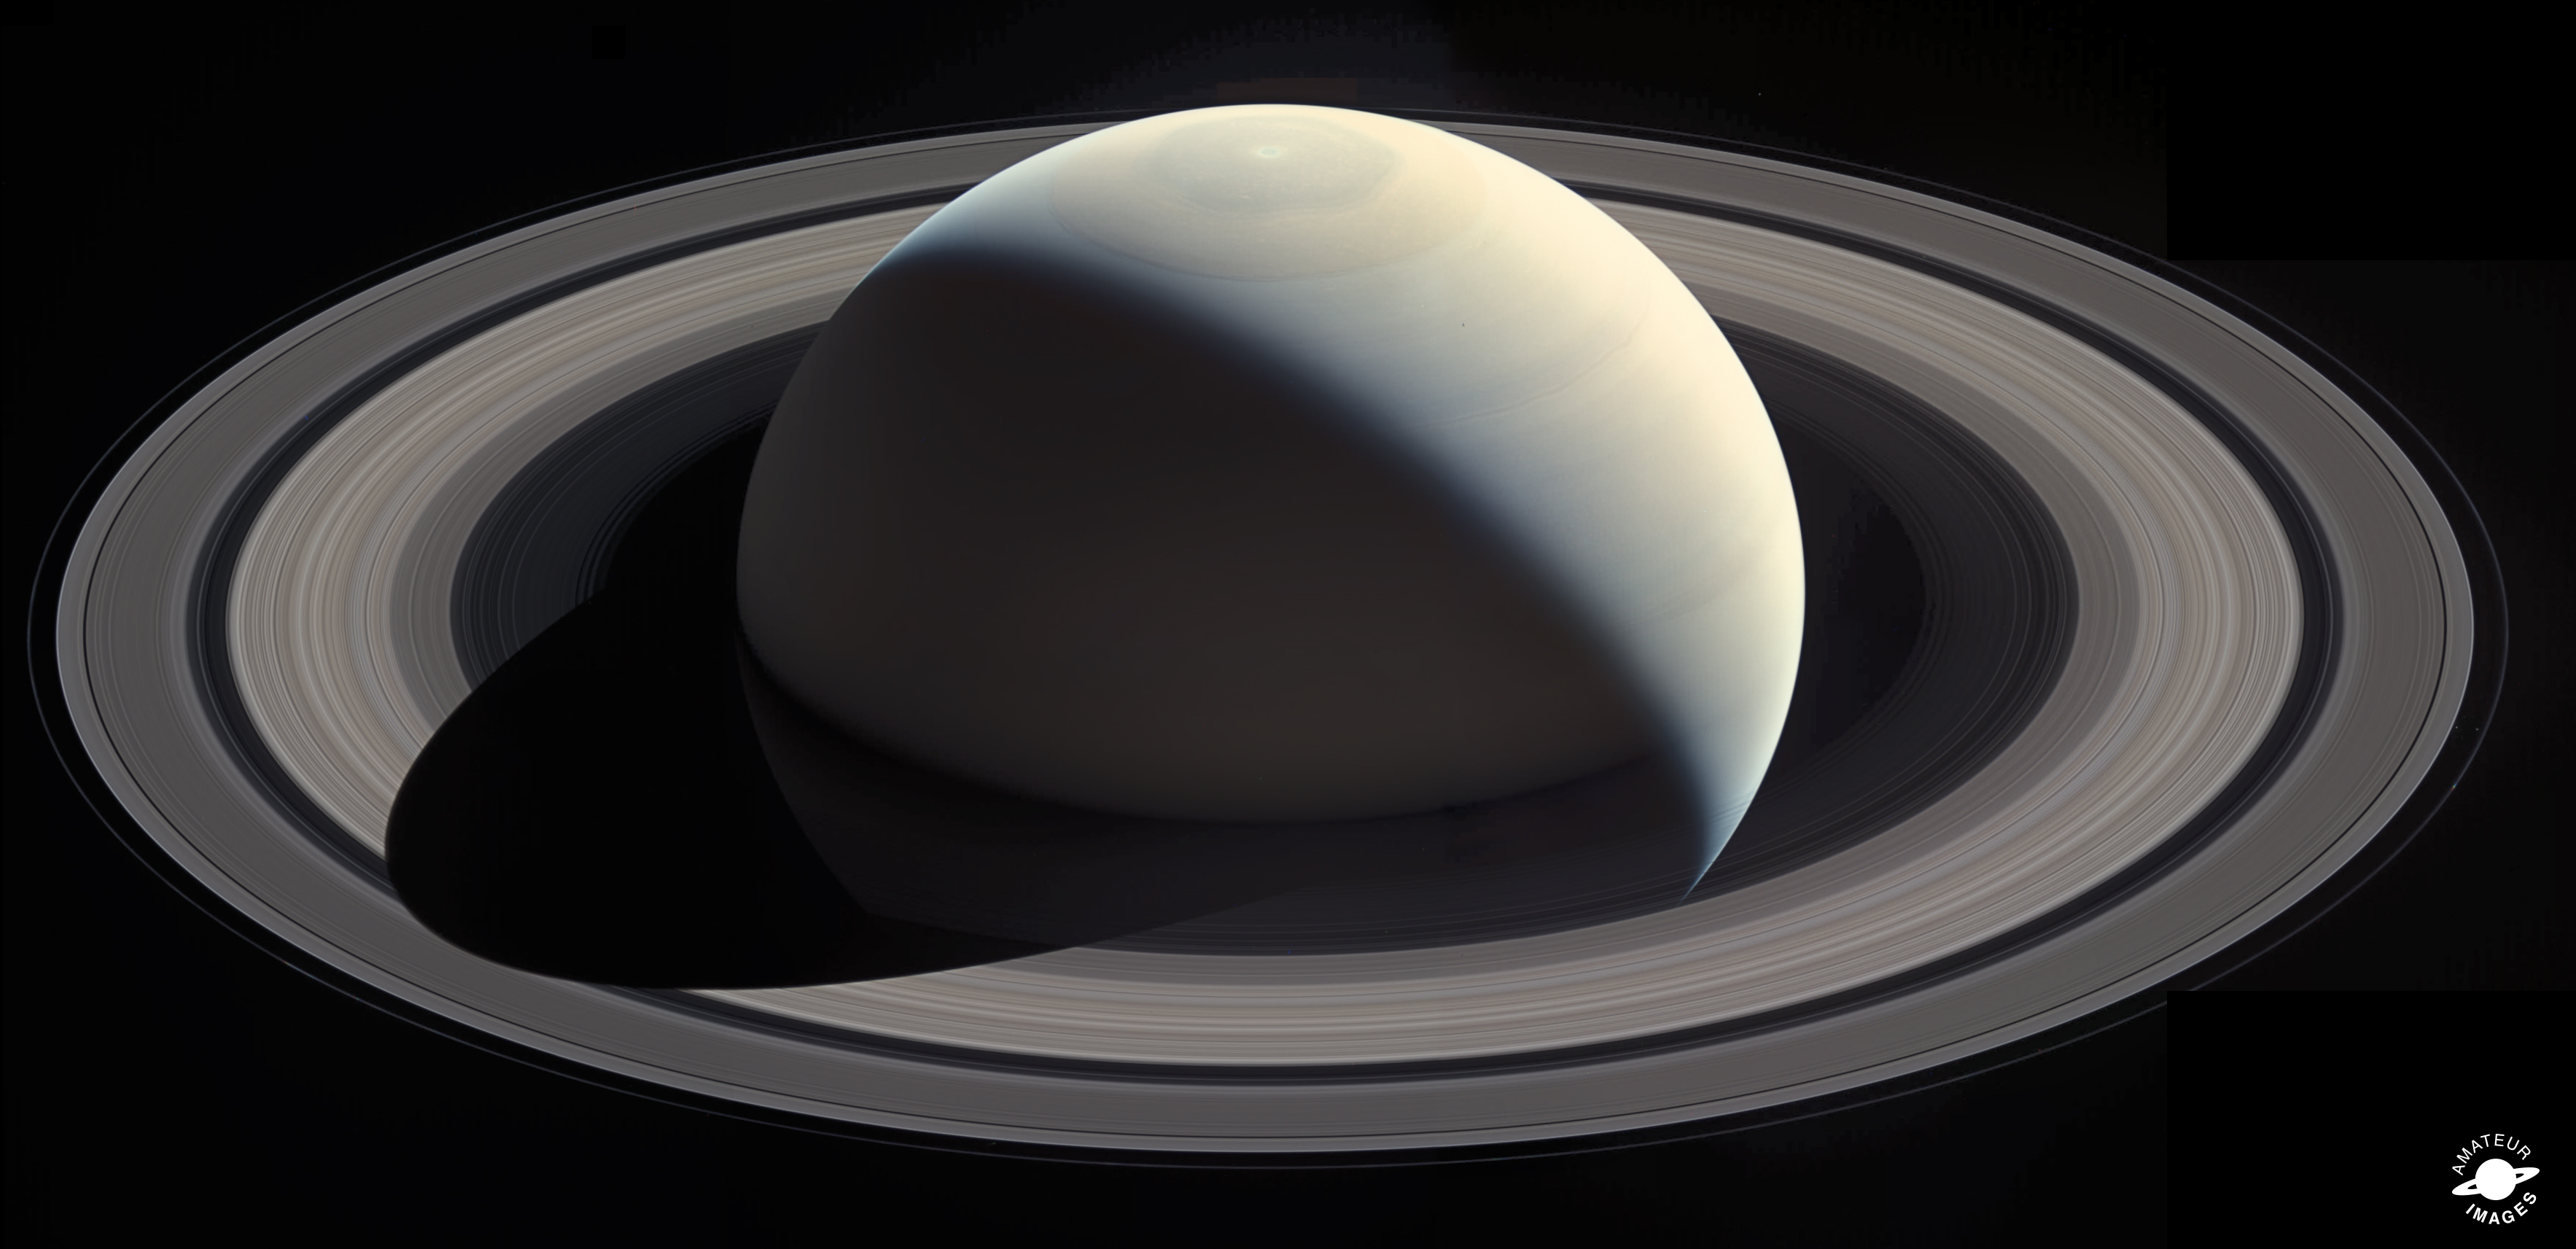 Full image of Saturn